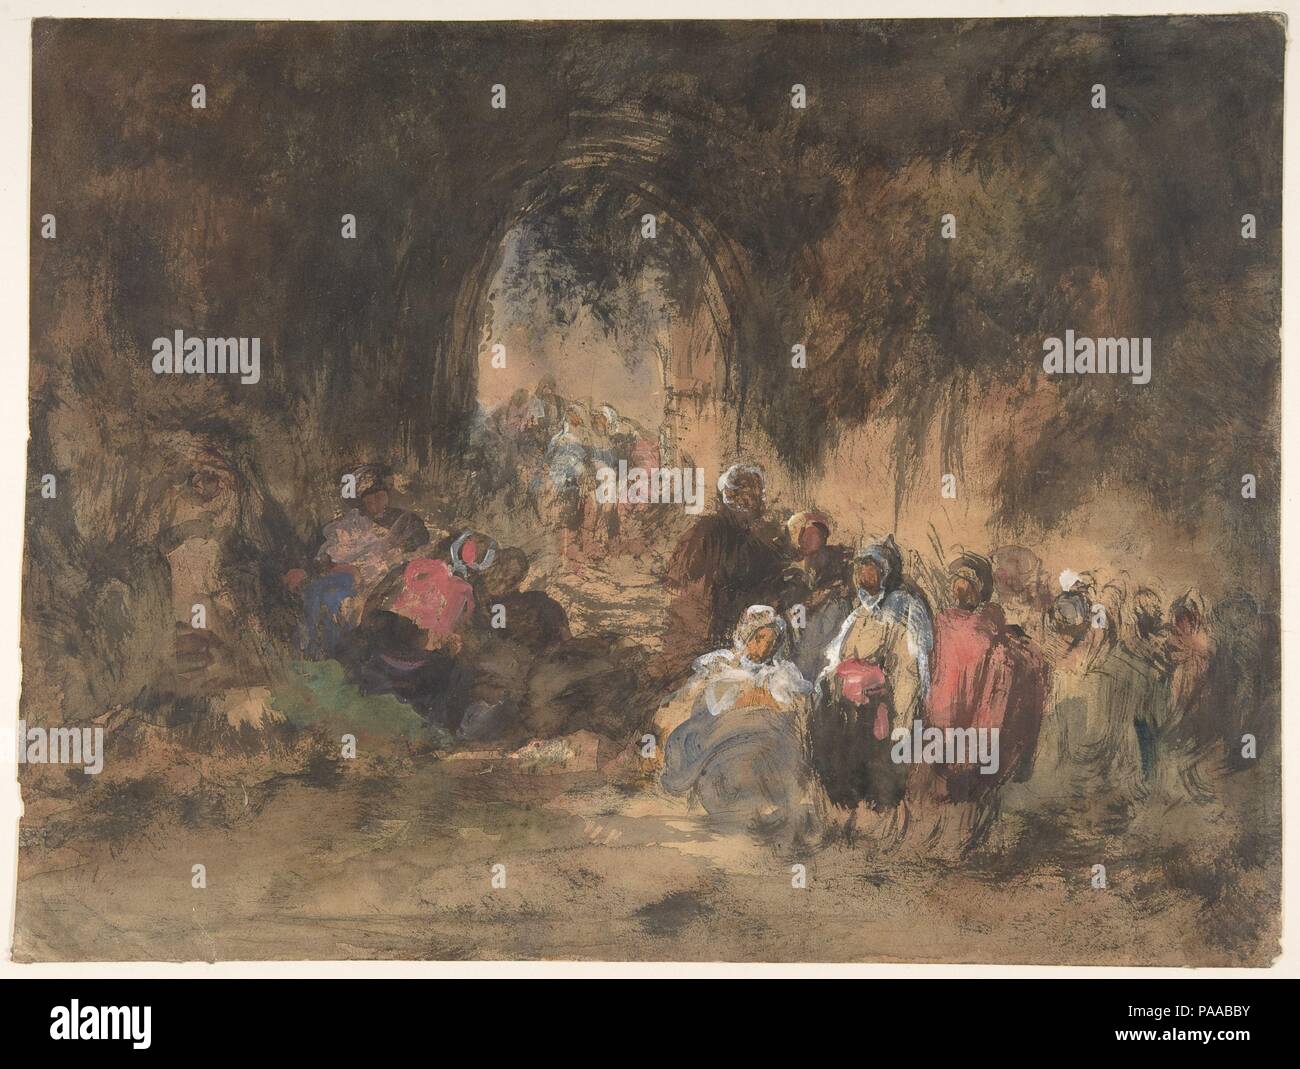 Arabs Resting. Artist: Eugenio Lucas (Spanish, Madrid 1817-1870 Madrid). Dimensions: 9-3/4 x 13 in.  (24.8 x 33 cm). Date: 1817-70. Museum: Metropolitan Museum of Art, New York, USA. Stock Photo